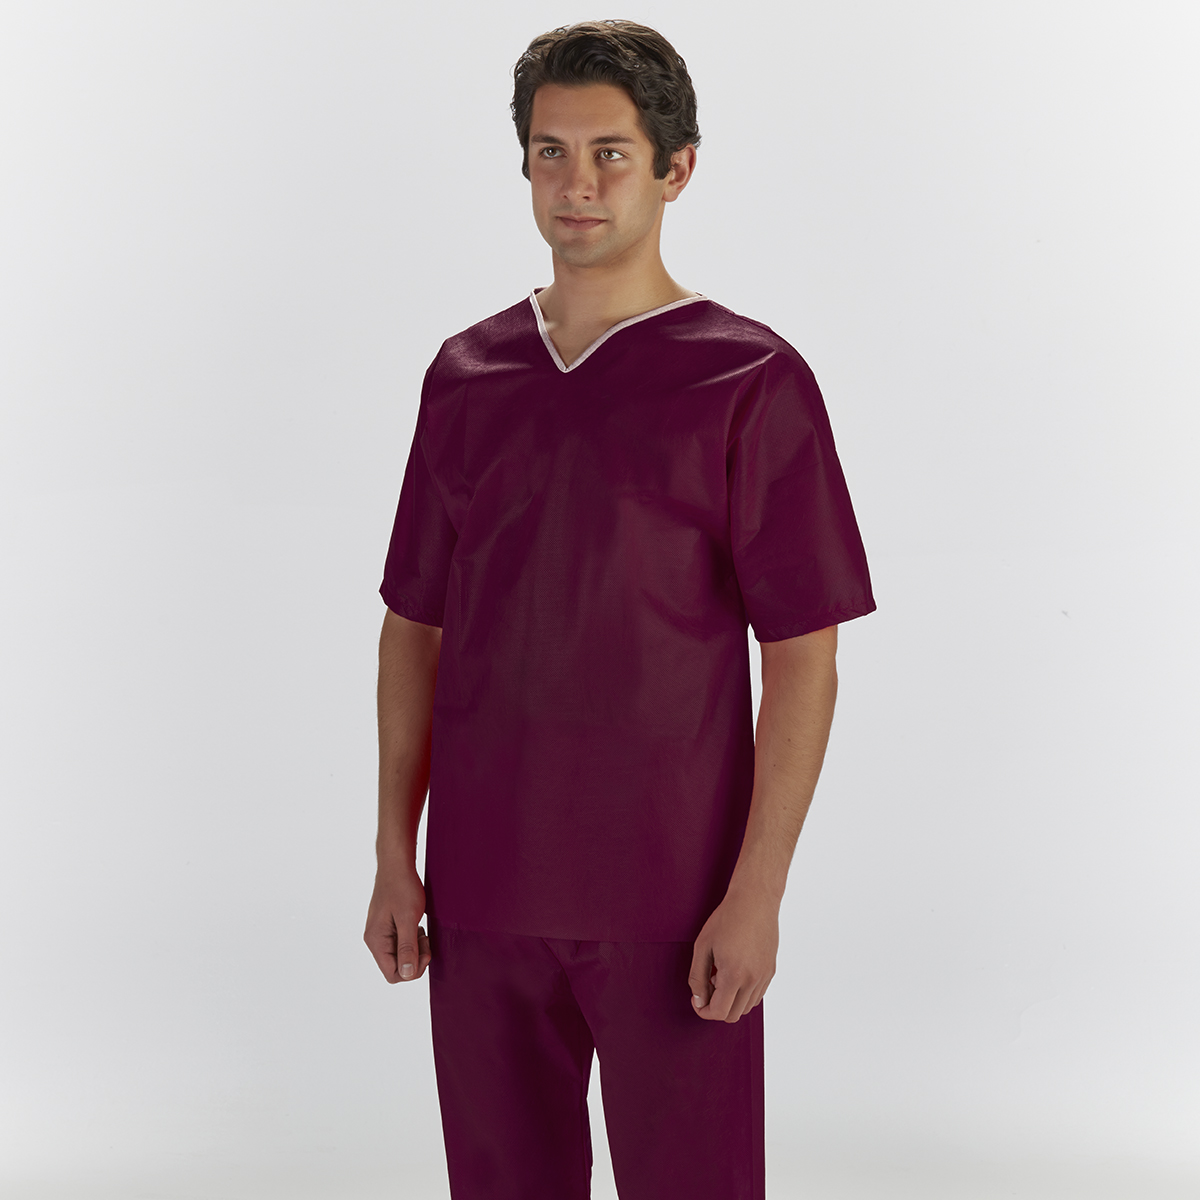 Graham Medical® Maroon Nonwoven Disposable Elastic Scrub Pants and V-Neck Shirt